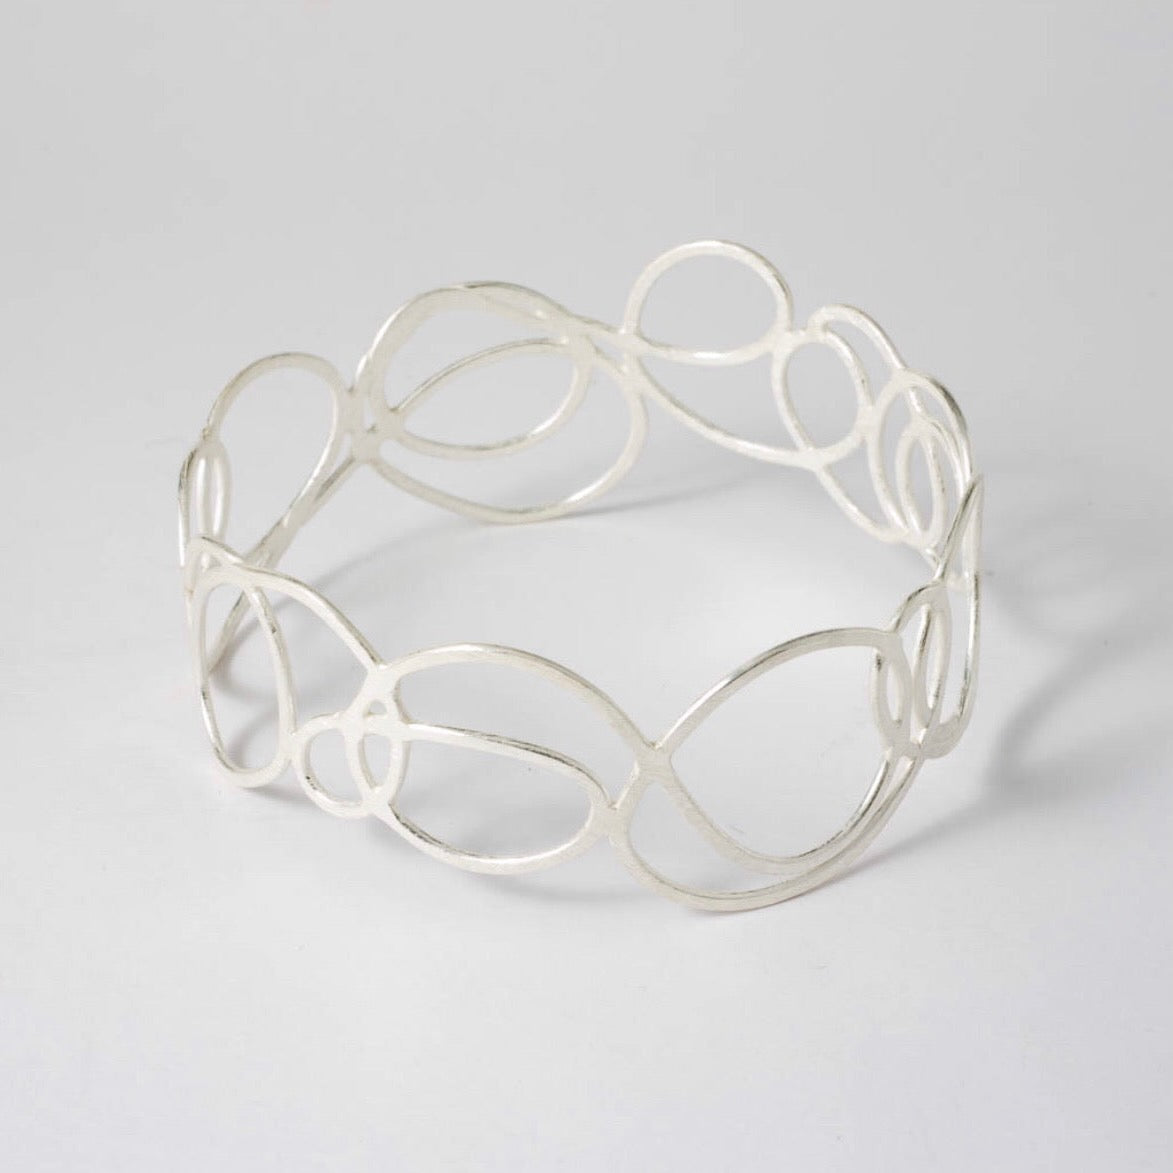 Silver bracelet made from thin swirls